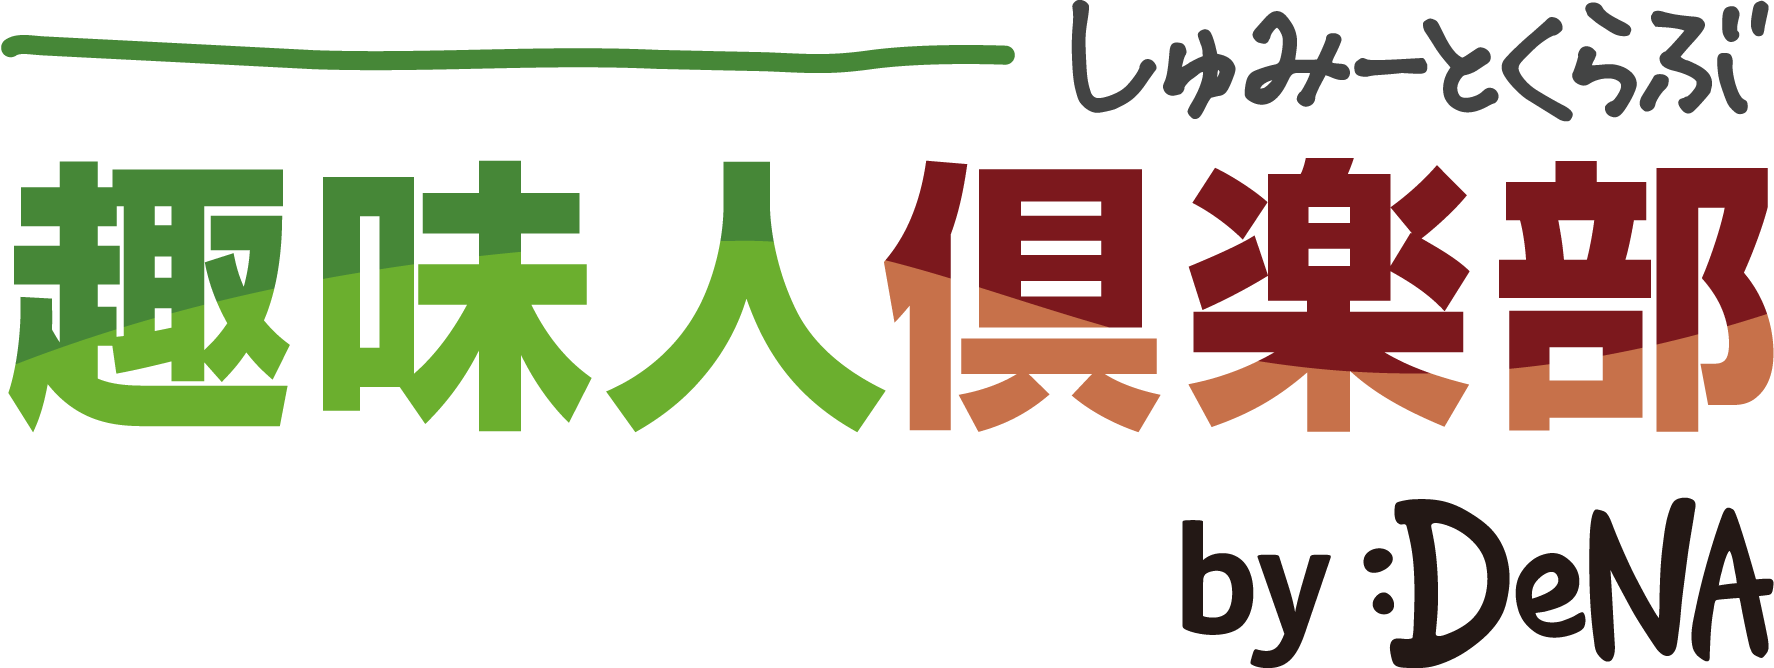 Japanese IT Company Logo - Shumito Club: DeNA's social network for seniors in Japan